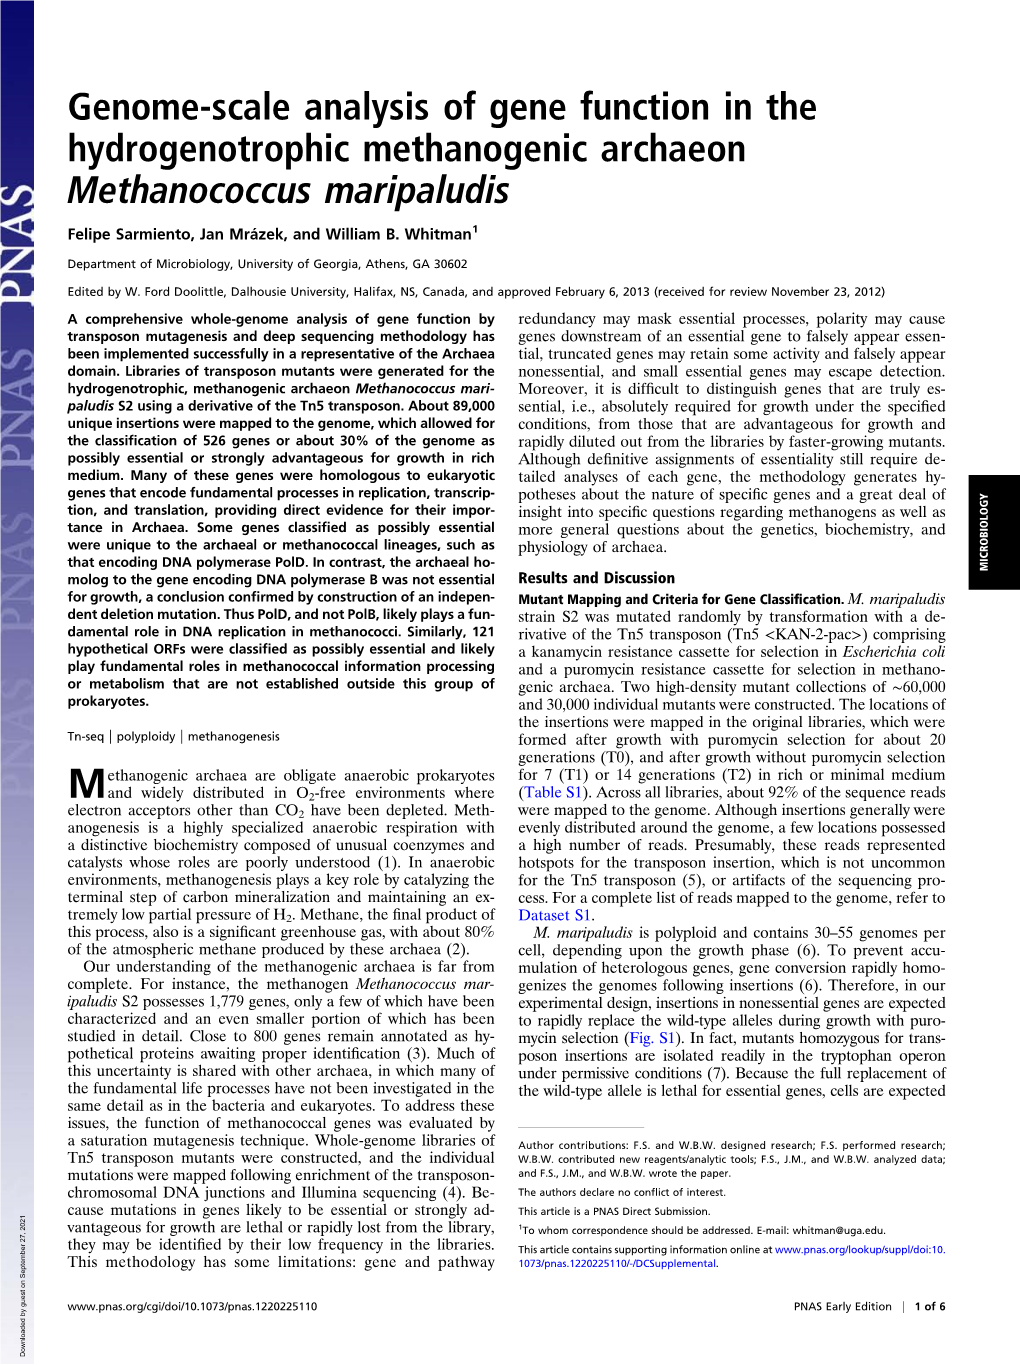 Genome-Scale Analysis of Gene Function in the Hydrogenotrophic Methanogenic Archaeon Methanococcus Maripaludis